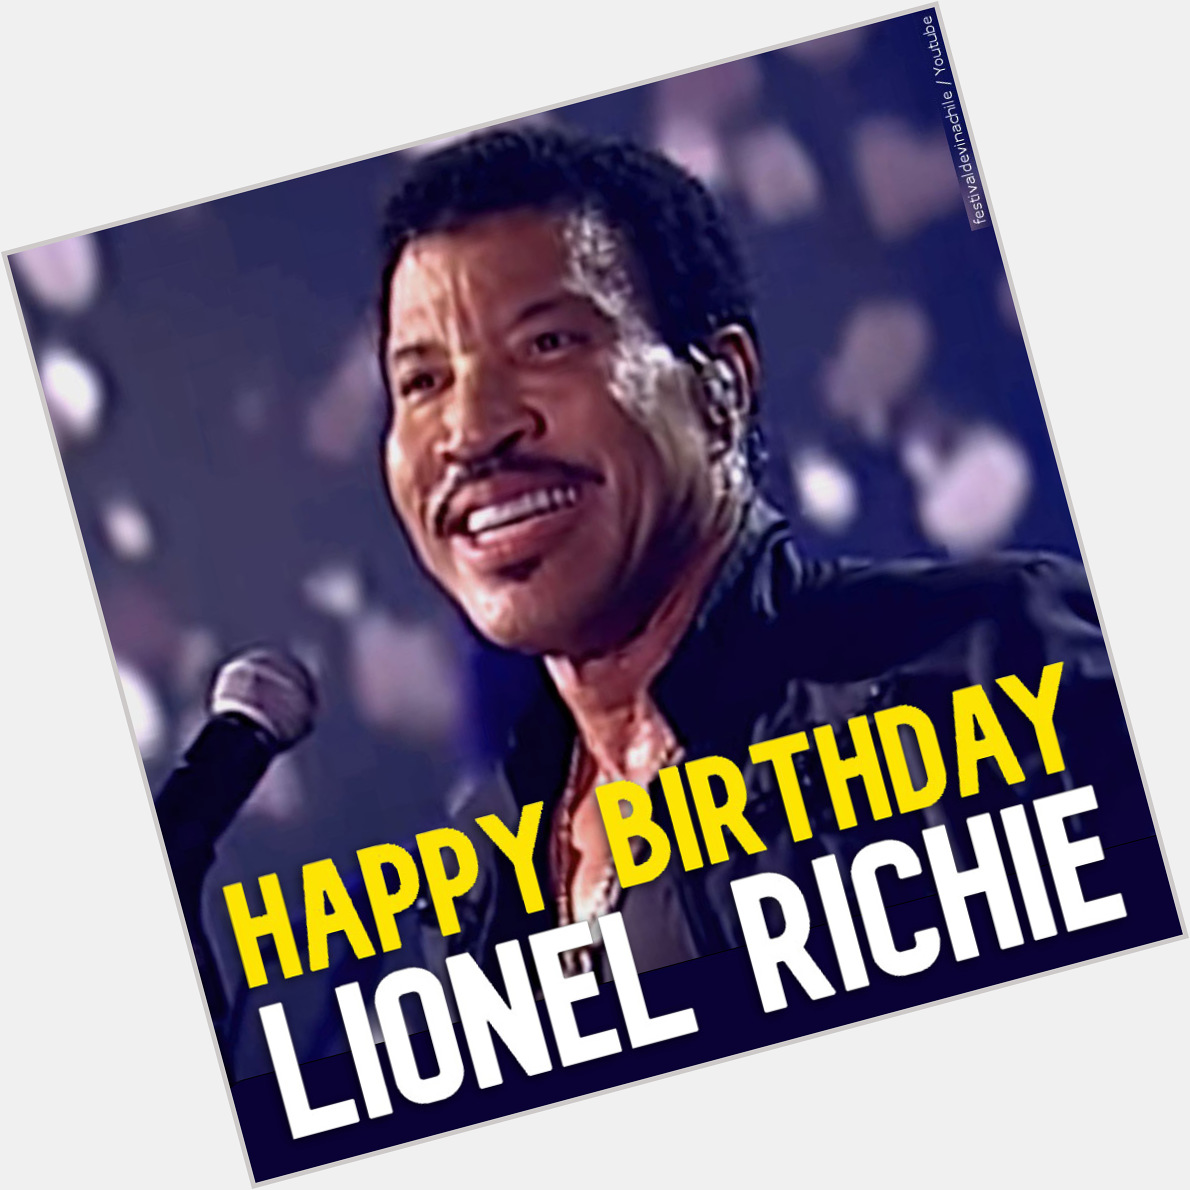 HAPPY BIRTHDAY! Lionel Richie turns 74 today. 